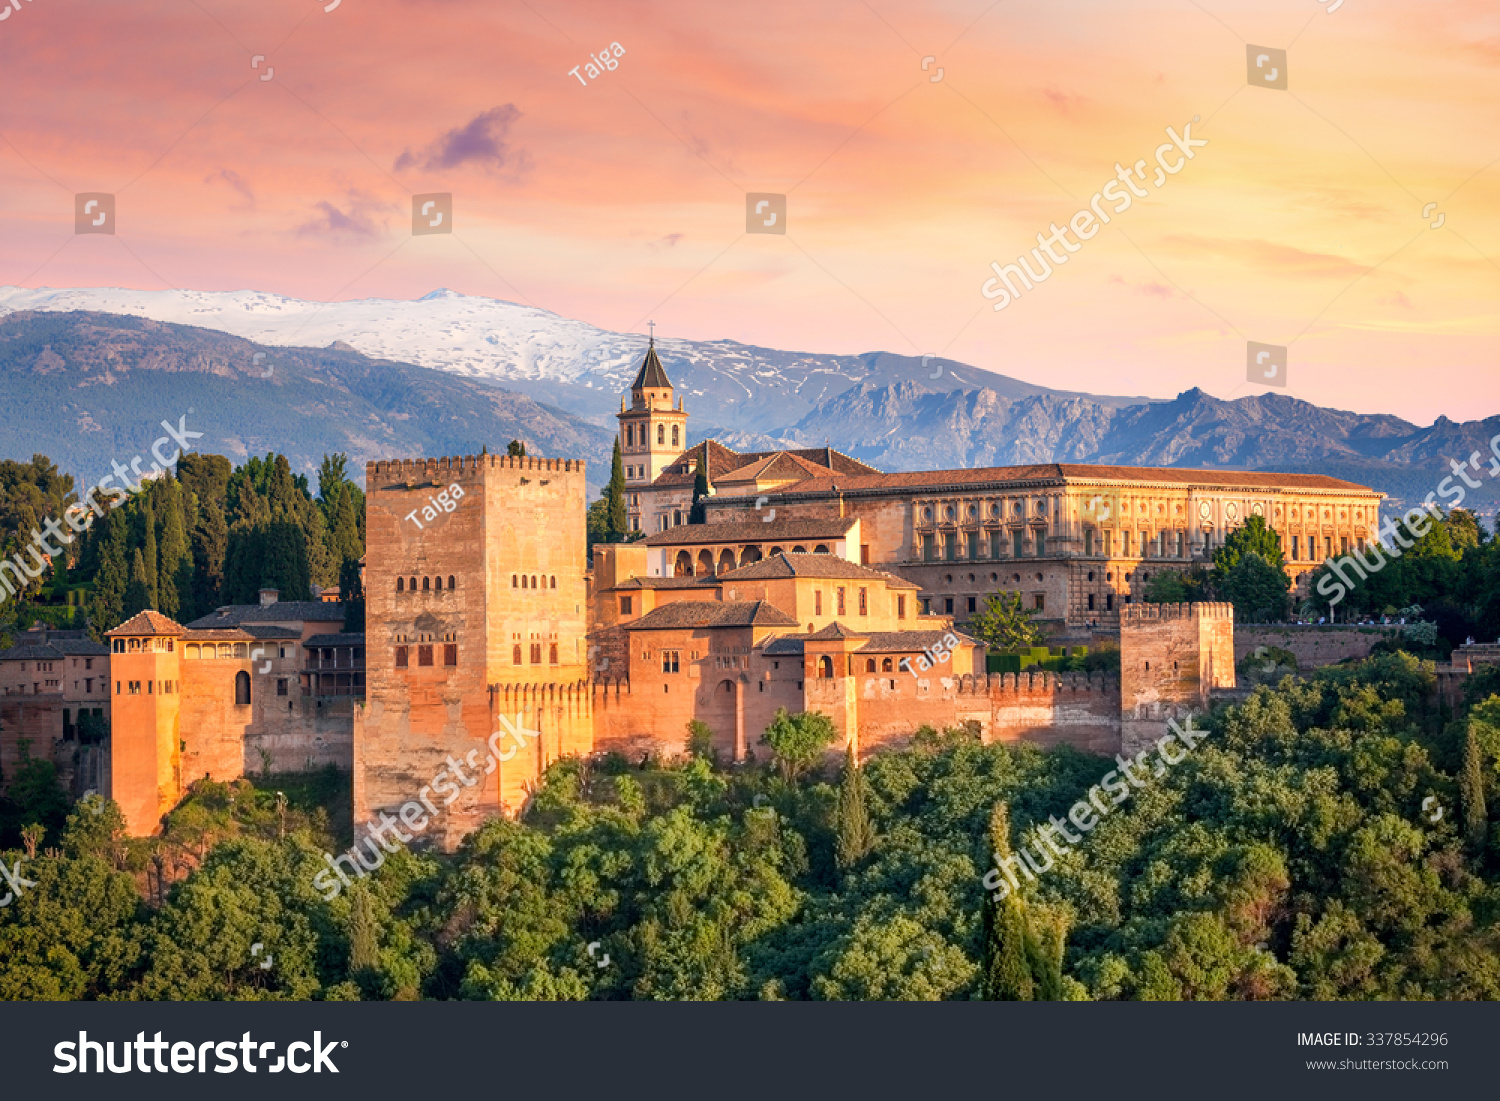 Ancient arabic fortress Alhambra at the beautiful evening time, Granada, Spain, European travel landmark #337854296